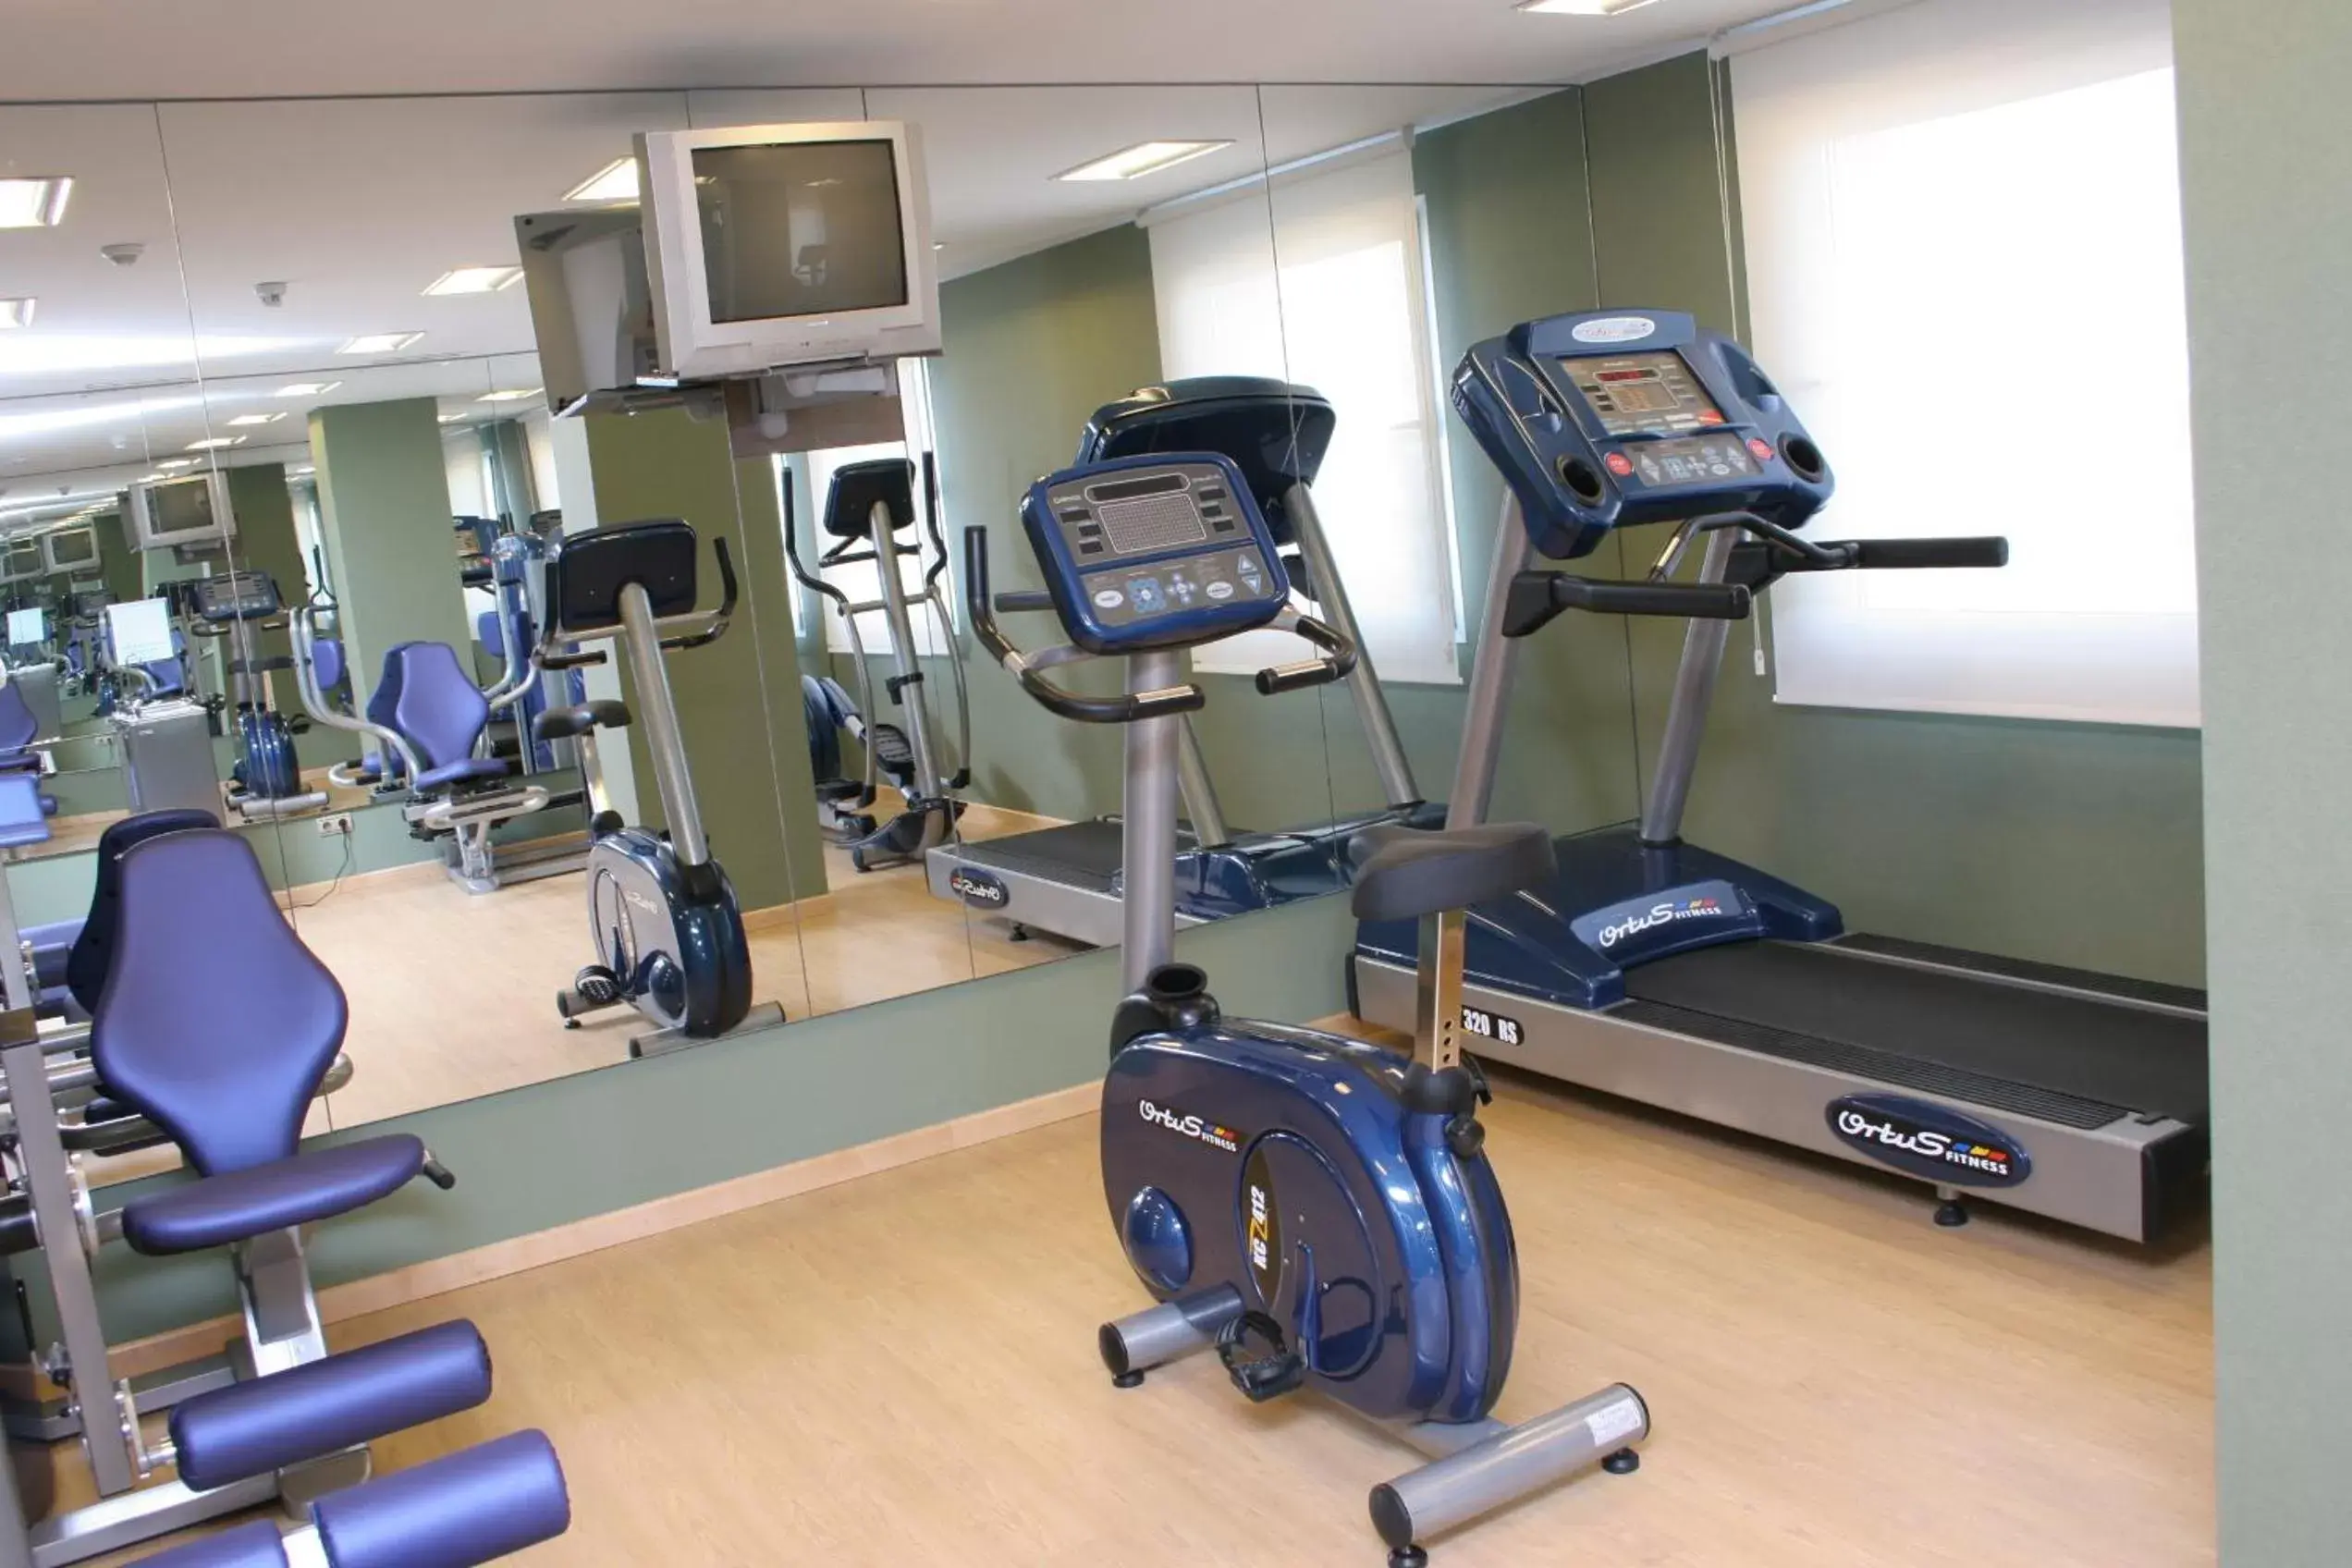 Fitness centre/facilities, Fitness Center/Facilities in Port Elche